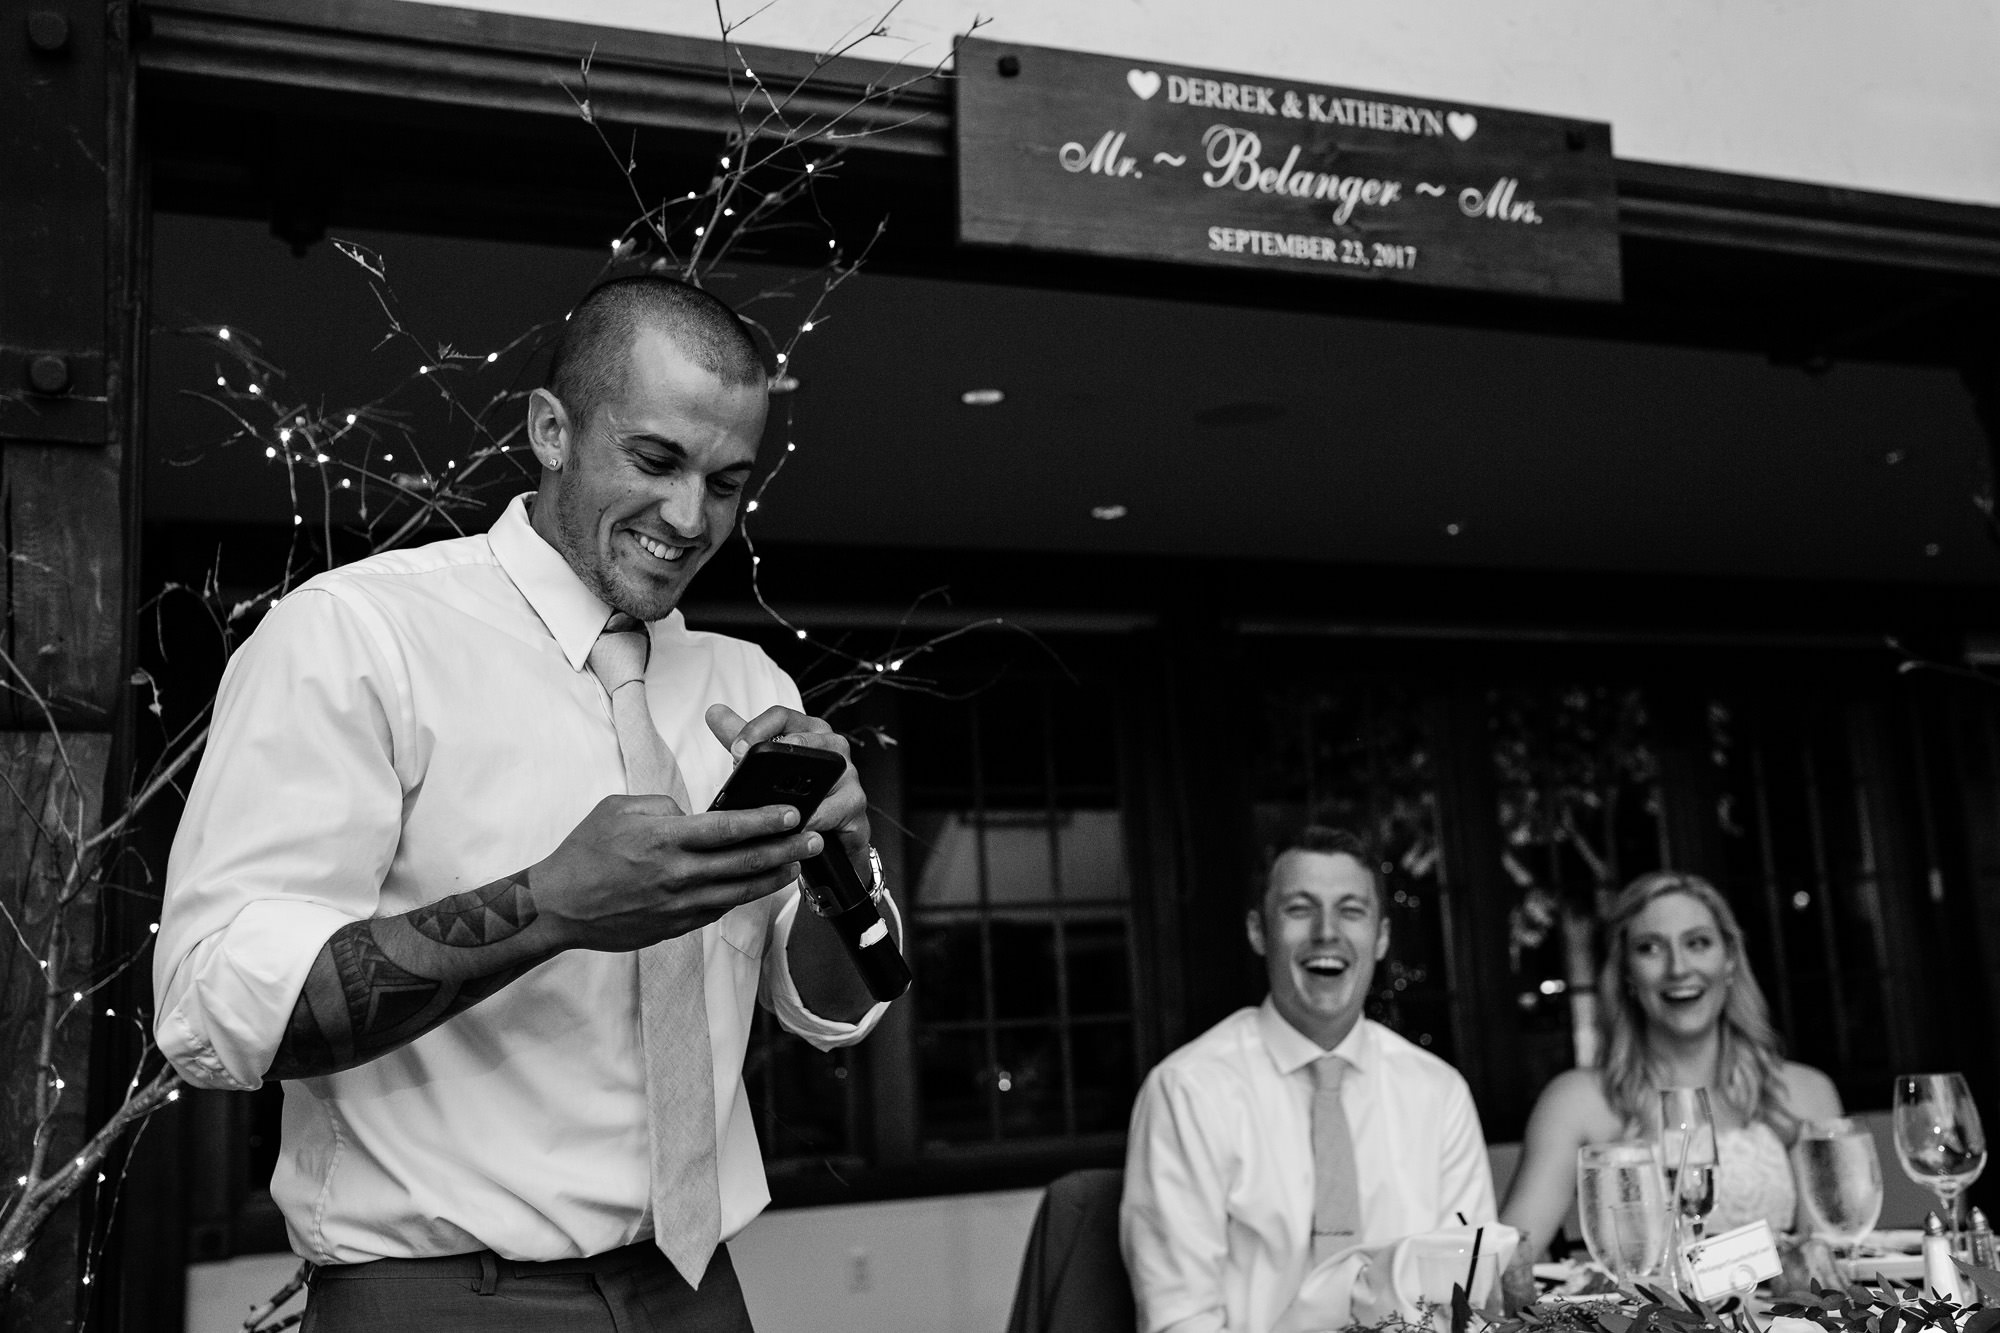 The best man gave an emotional toast at a Bar Harbor Club wedding